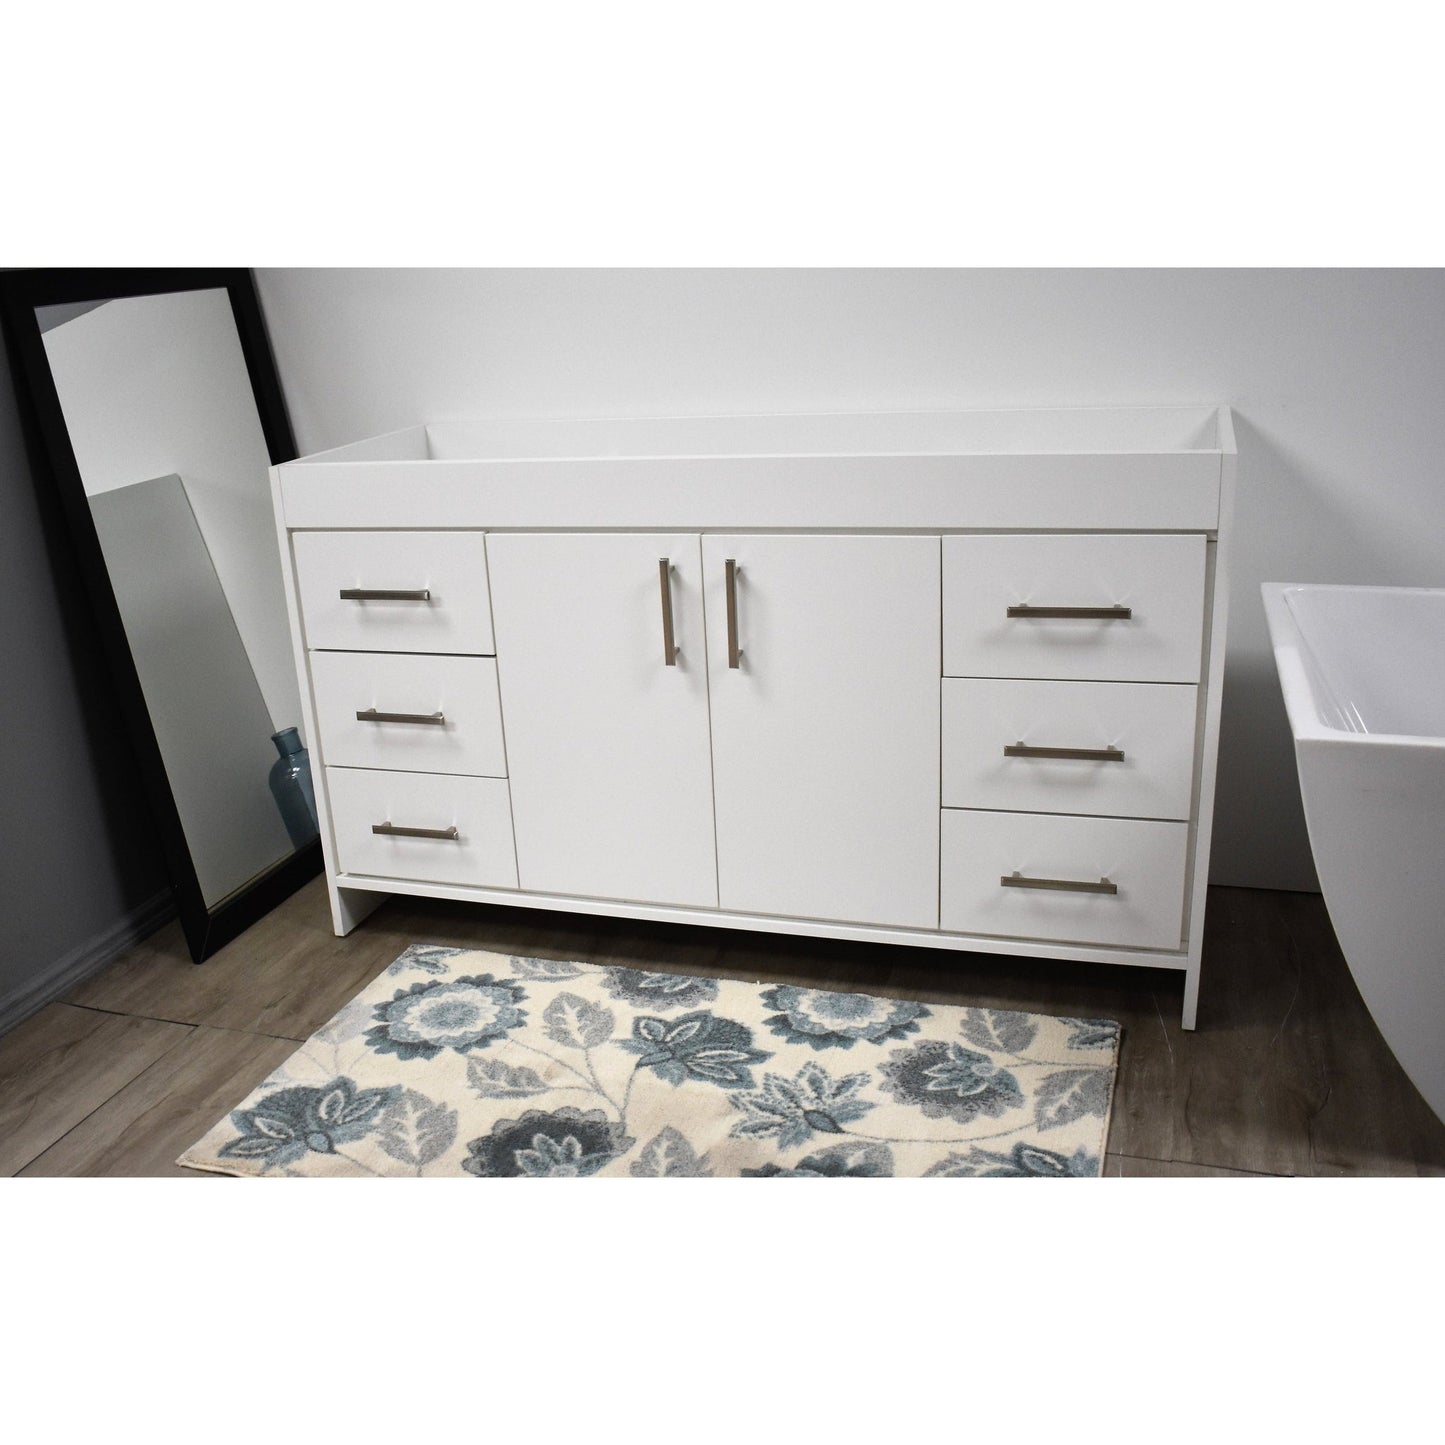 Volpa USA Capri 60" x 22" White Modern Bathroom Vanity For Single Sink With Brushed Nickel Edge Handles